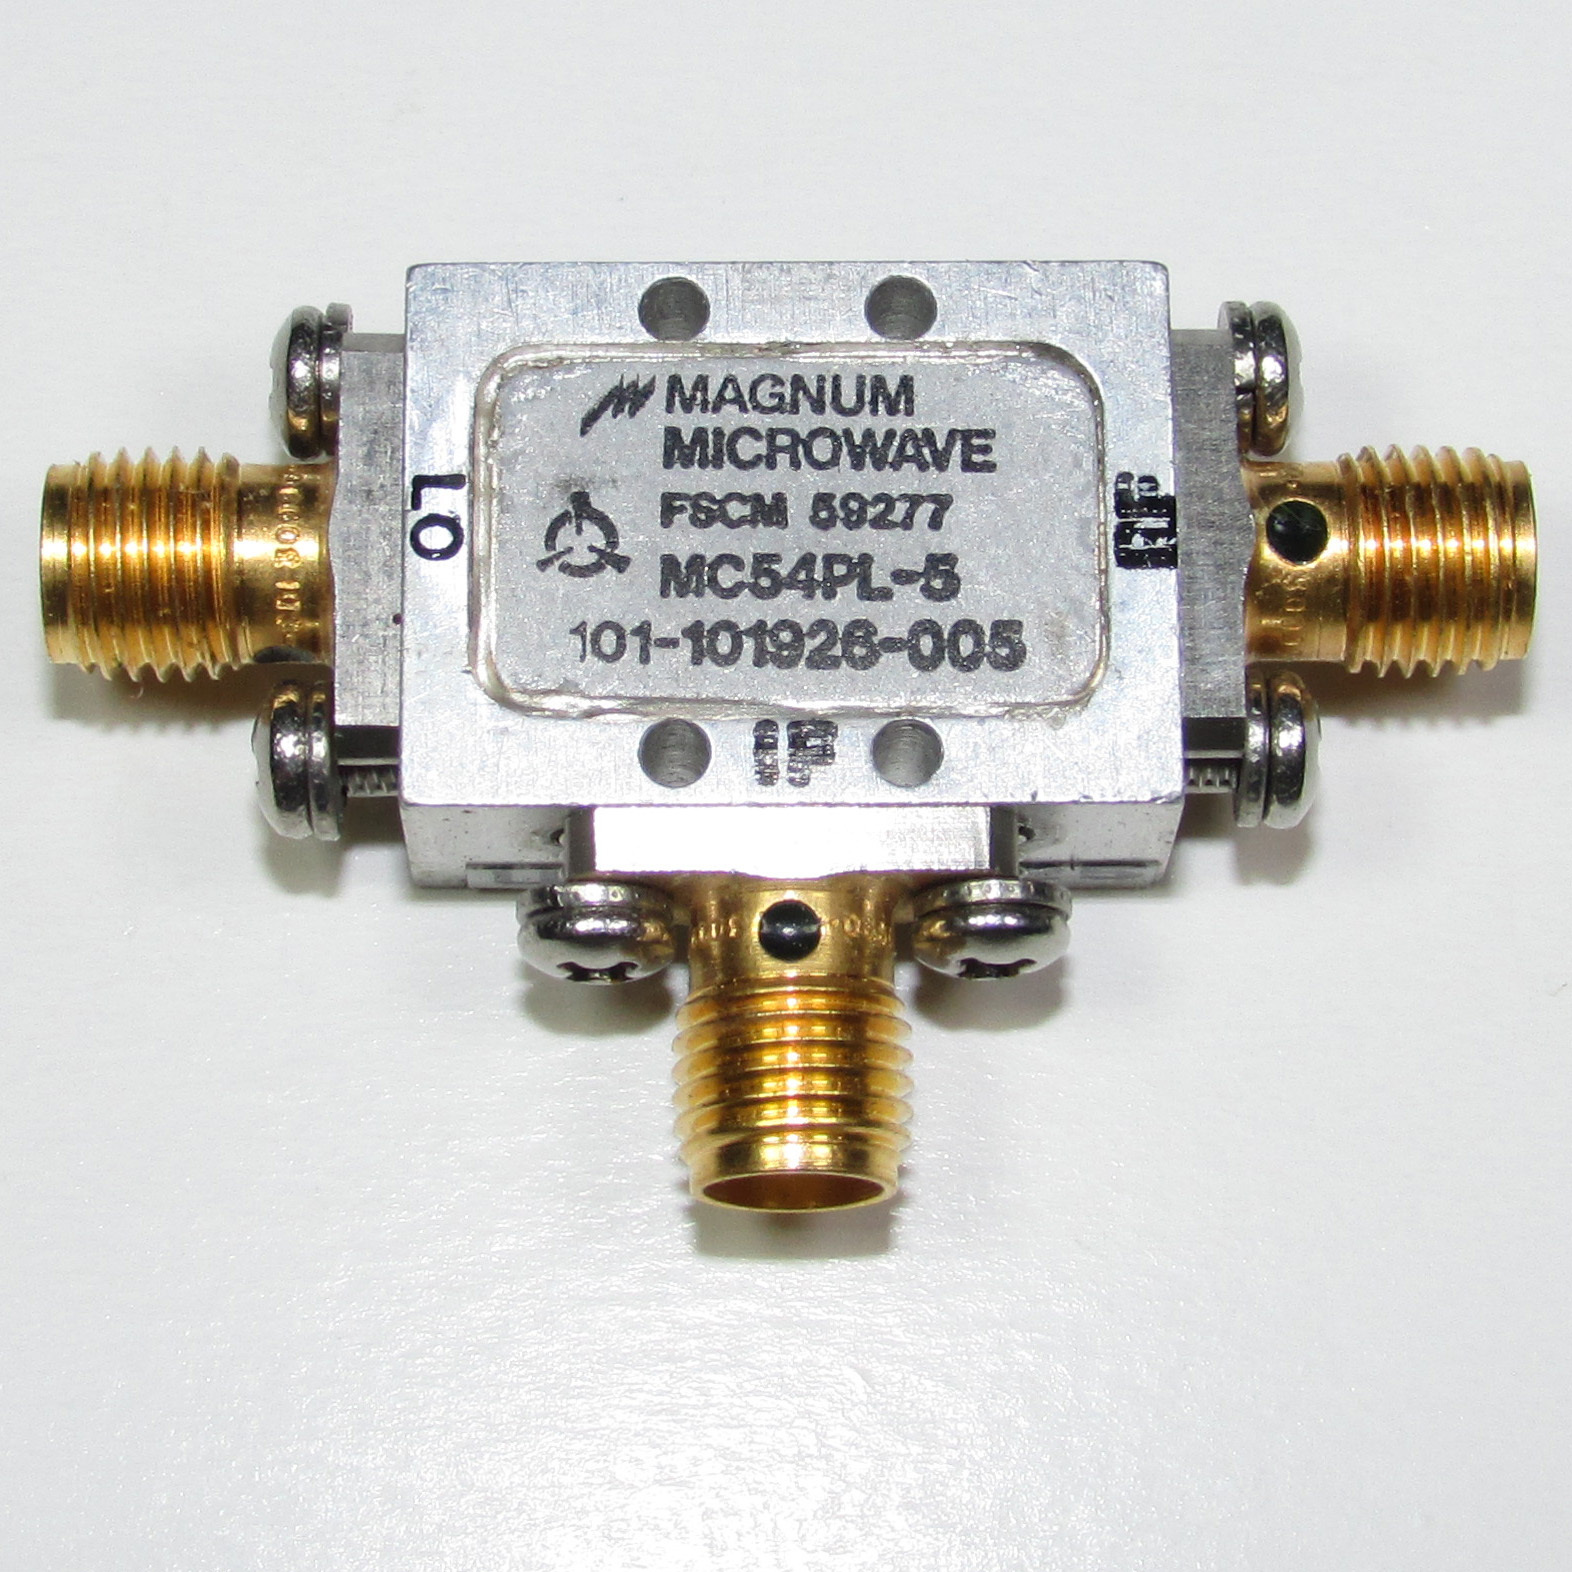 American MAGNUM MC54PL-5 3.5-12GHz SMA RF microwave coaxial double balance mixer